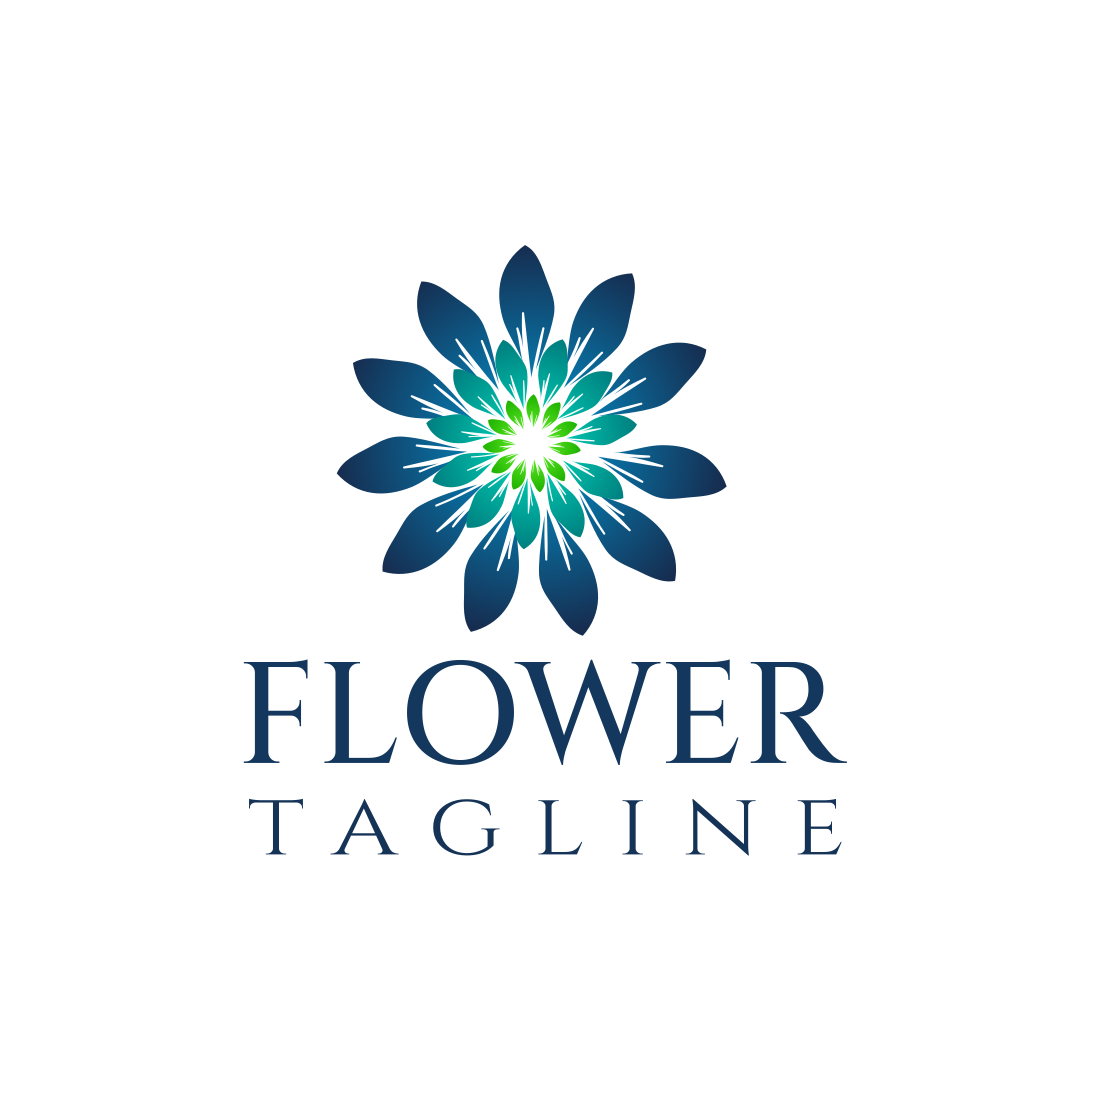 Elegant Flower Logo Design Template cover image.